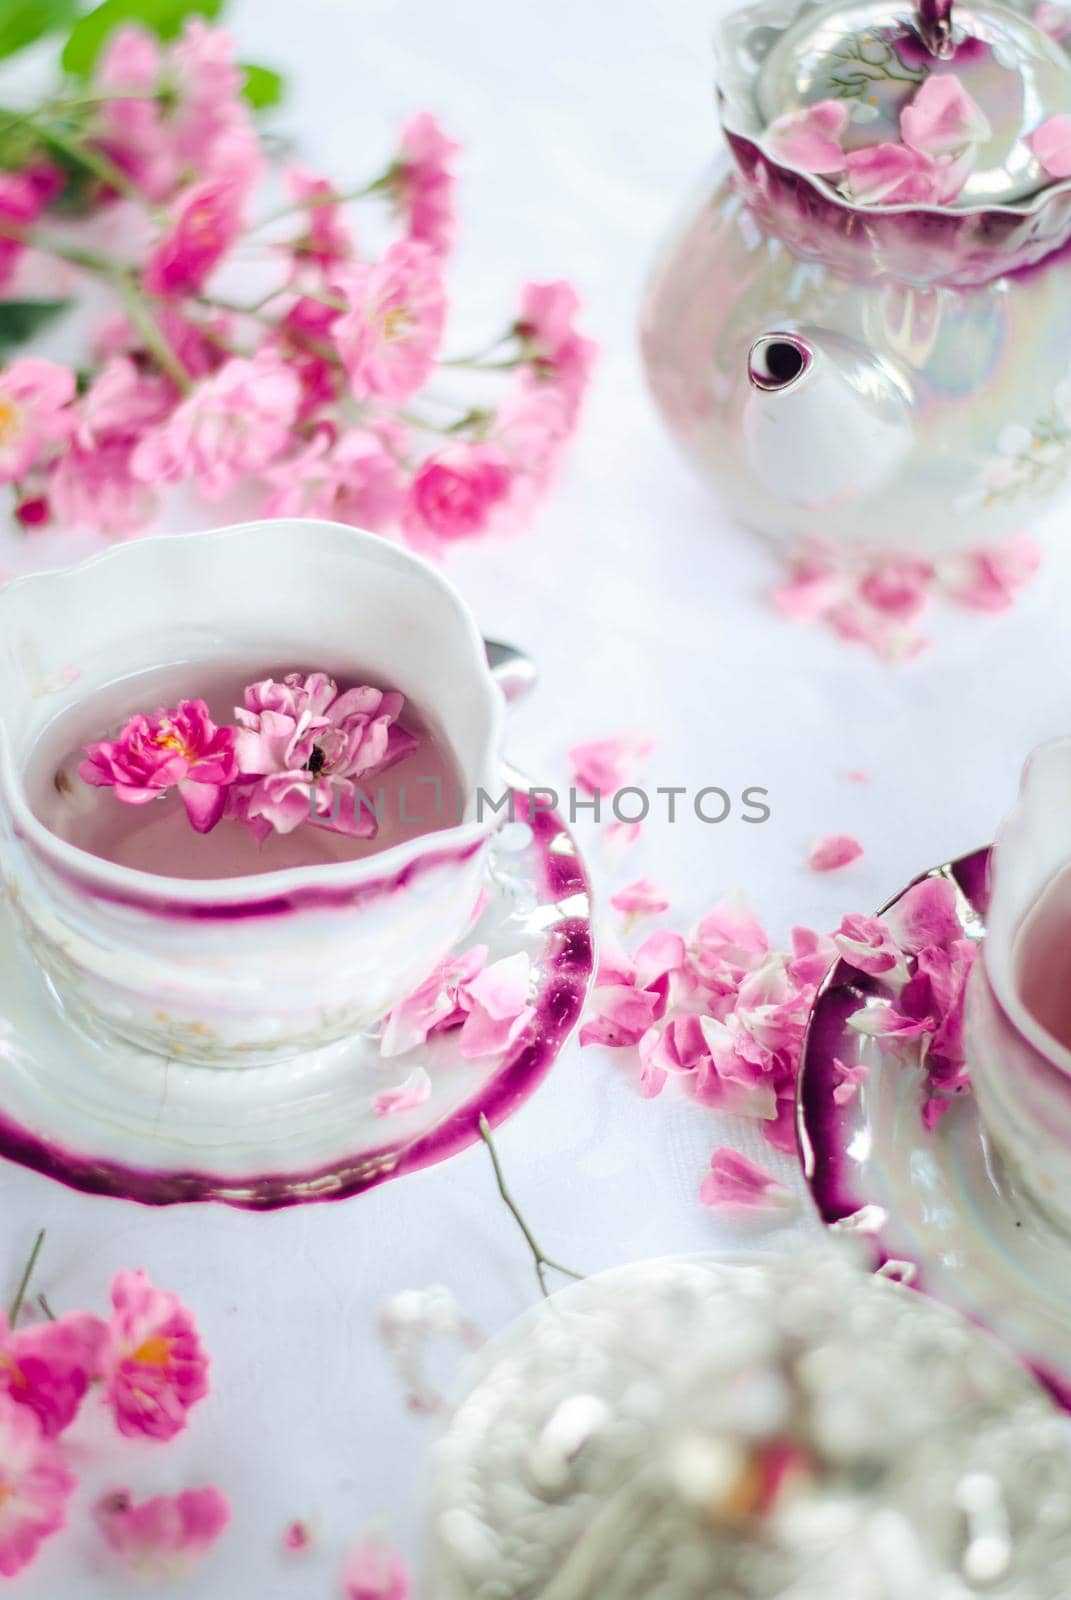 retro porcelain cup of hot rose tea. High quality photo